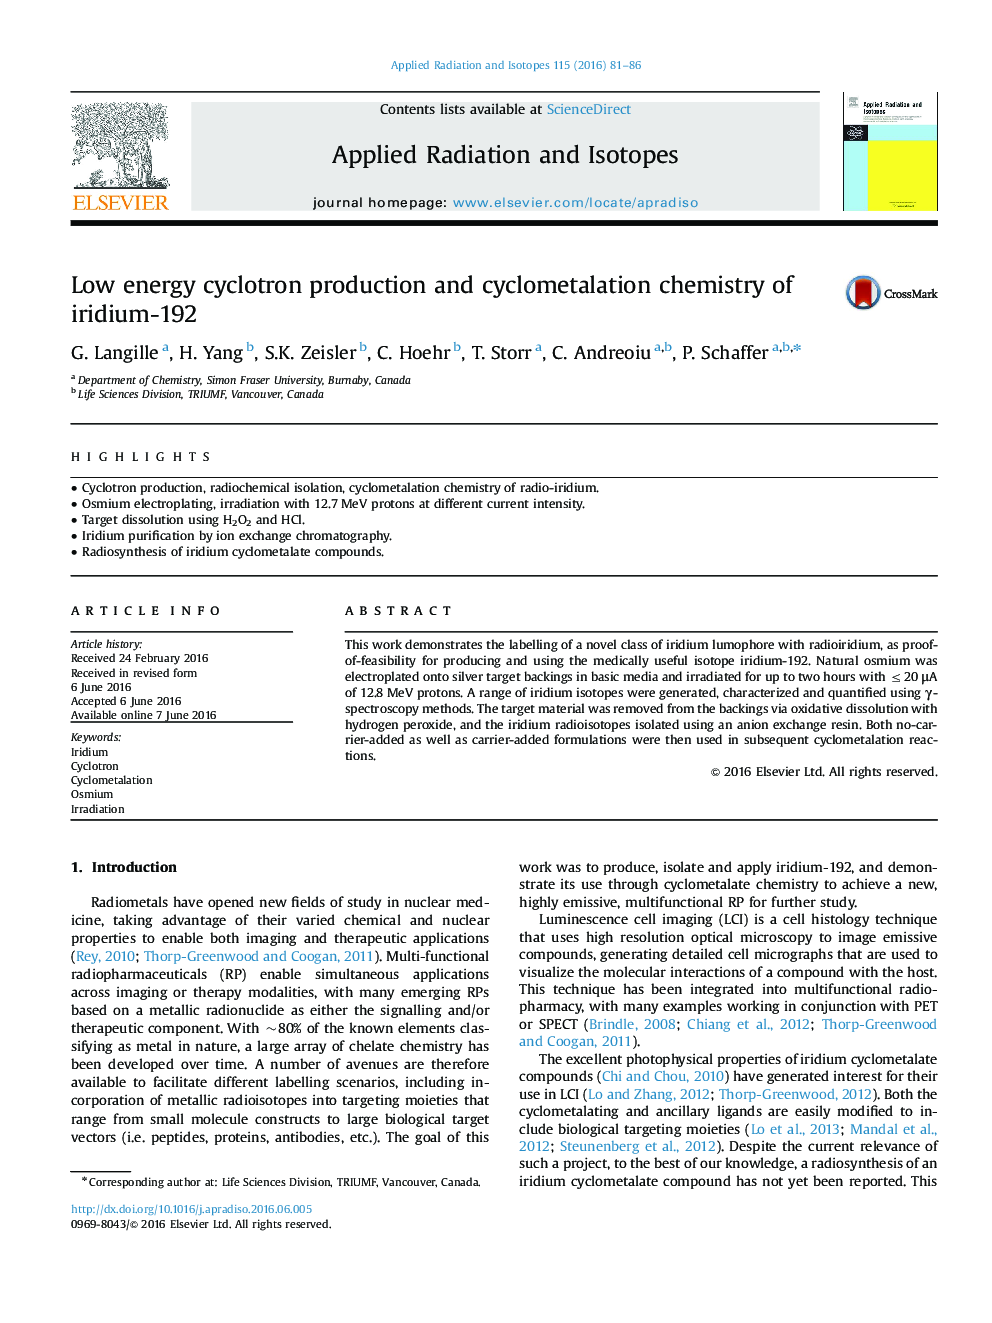 Low energy cyclotron production and cyclometalation chemistry of iridium-192